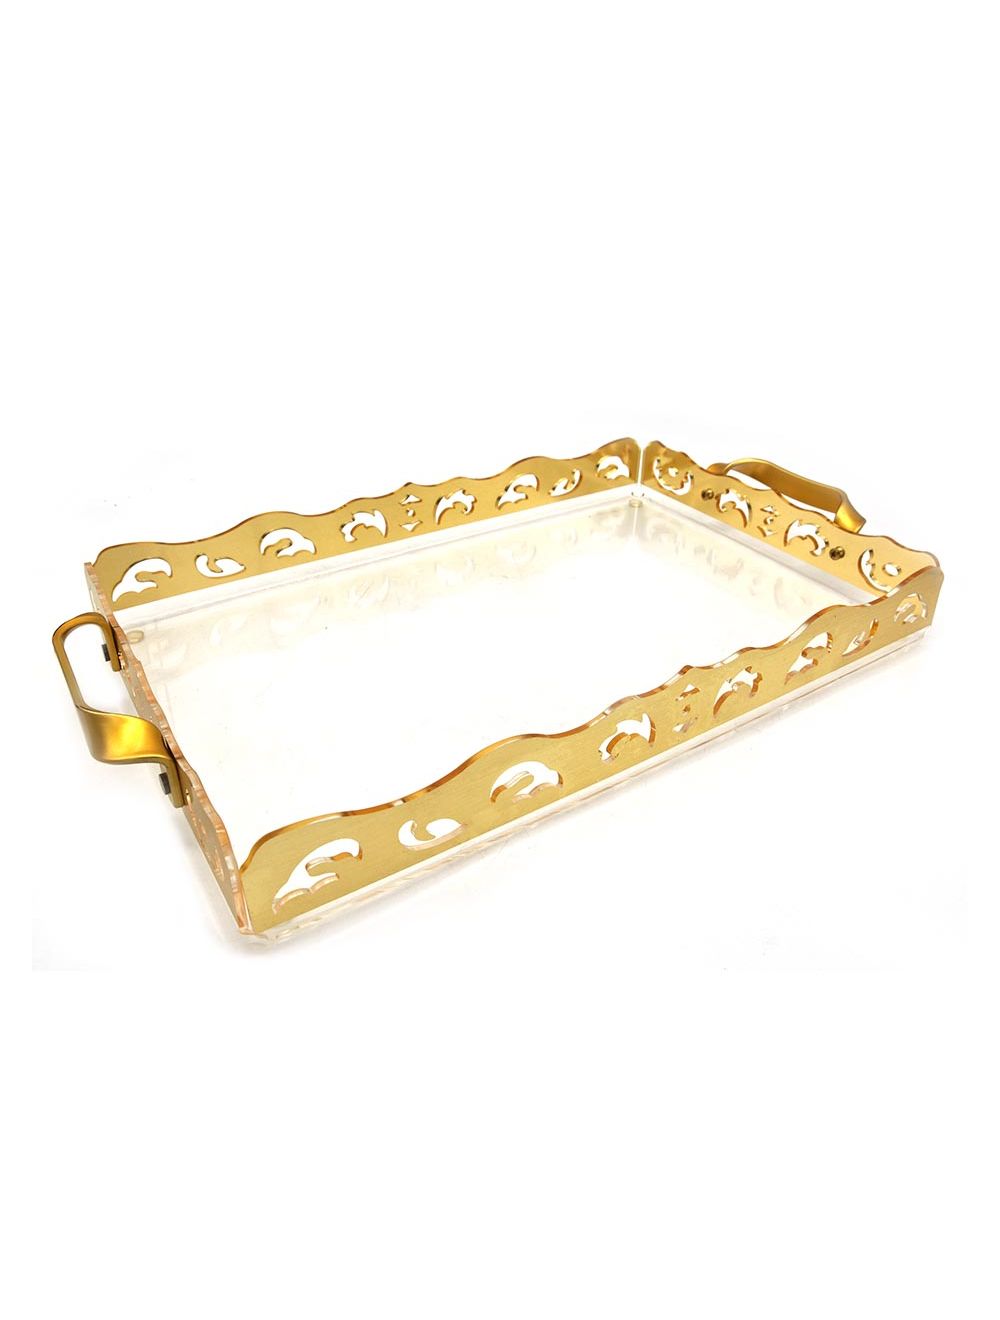 Medium Rectangular Acrylic Gold-Plated Tray with Handle